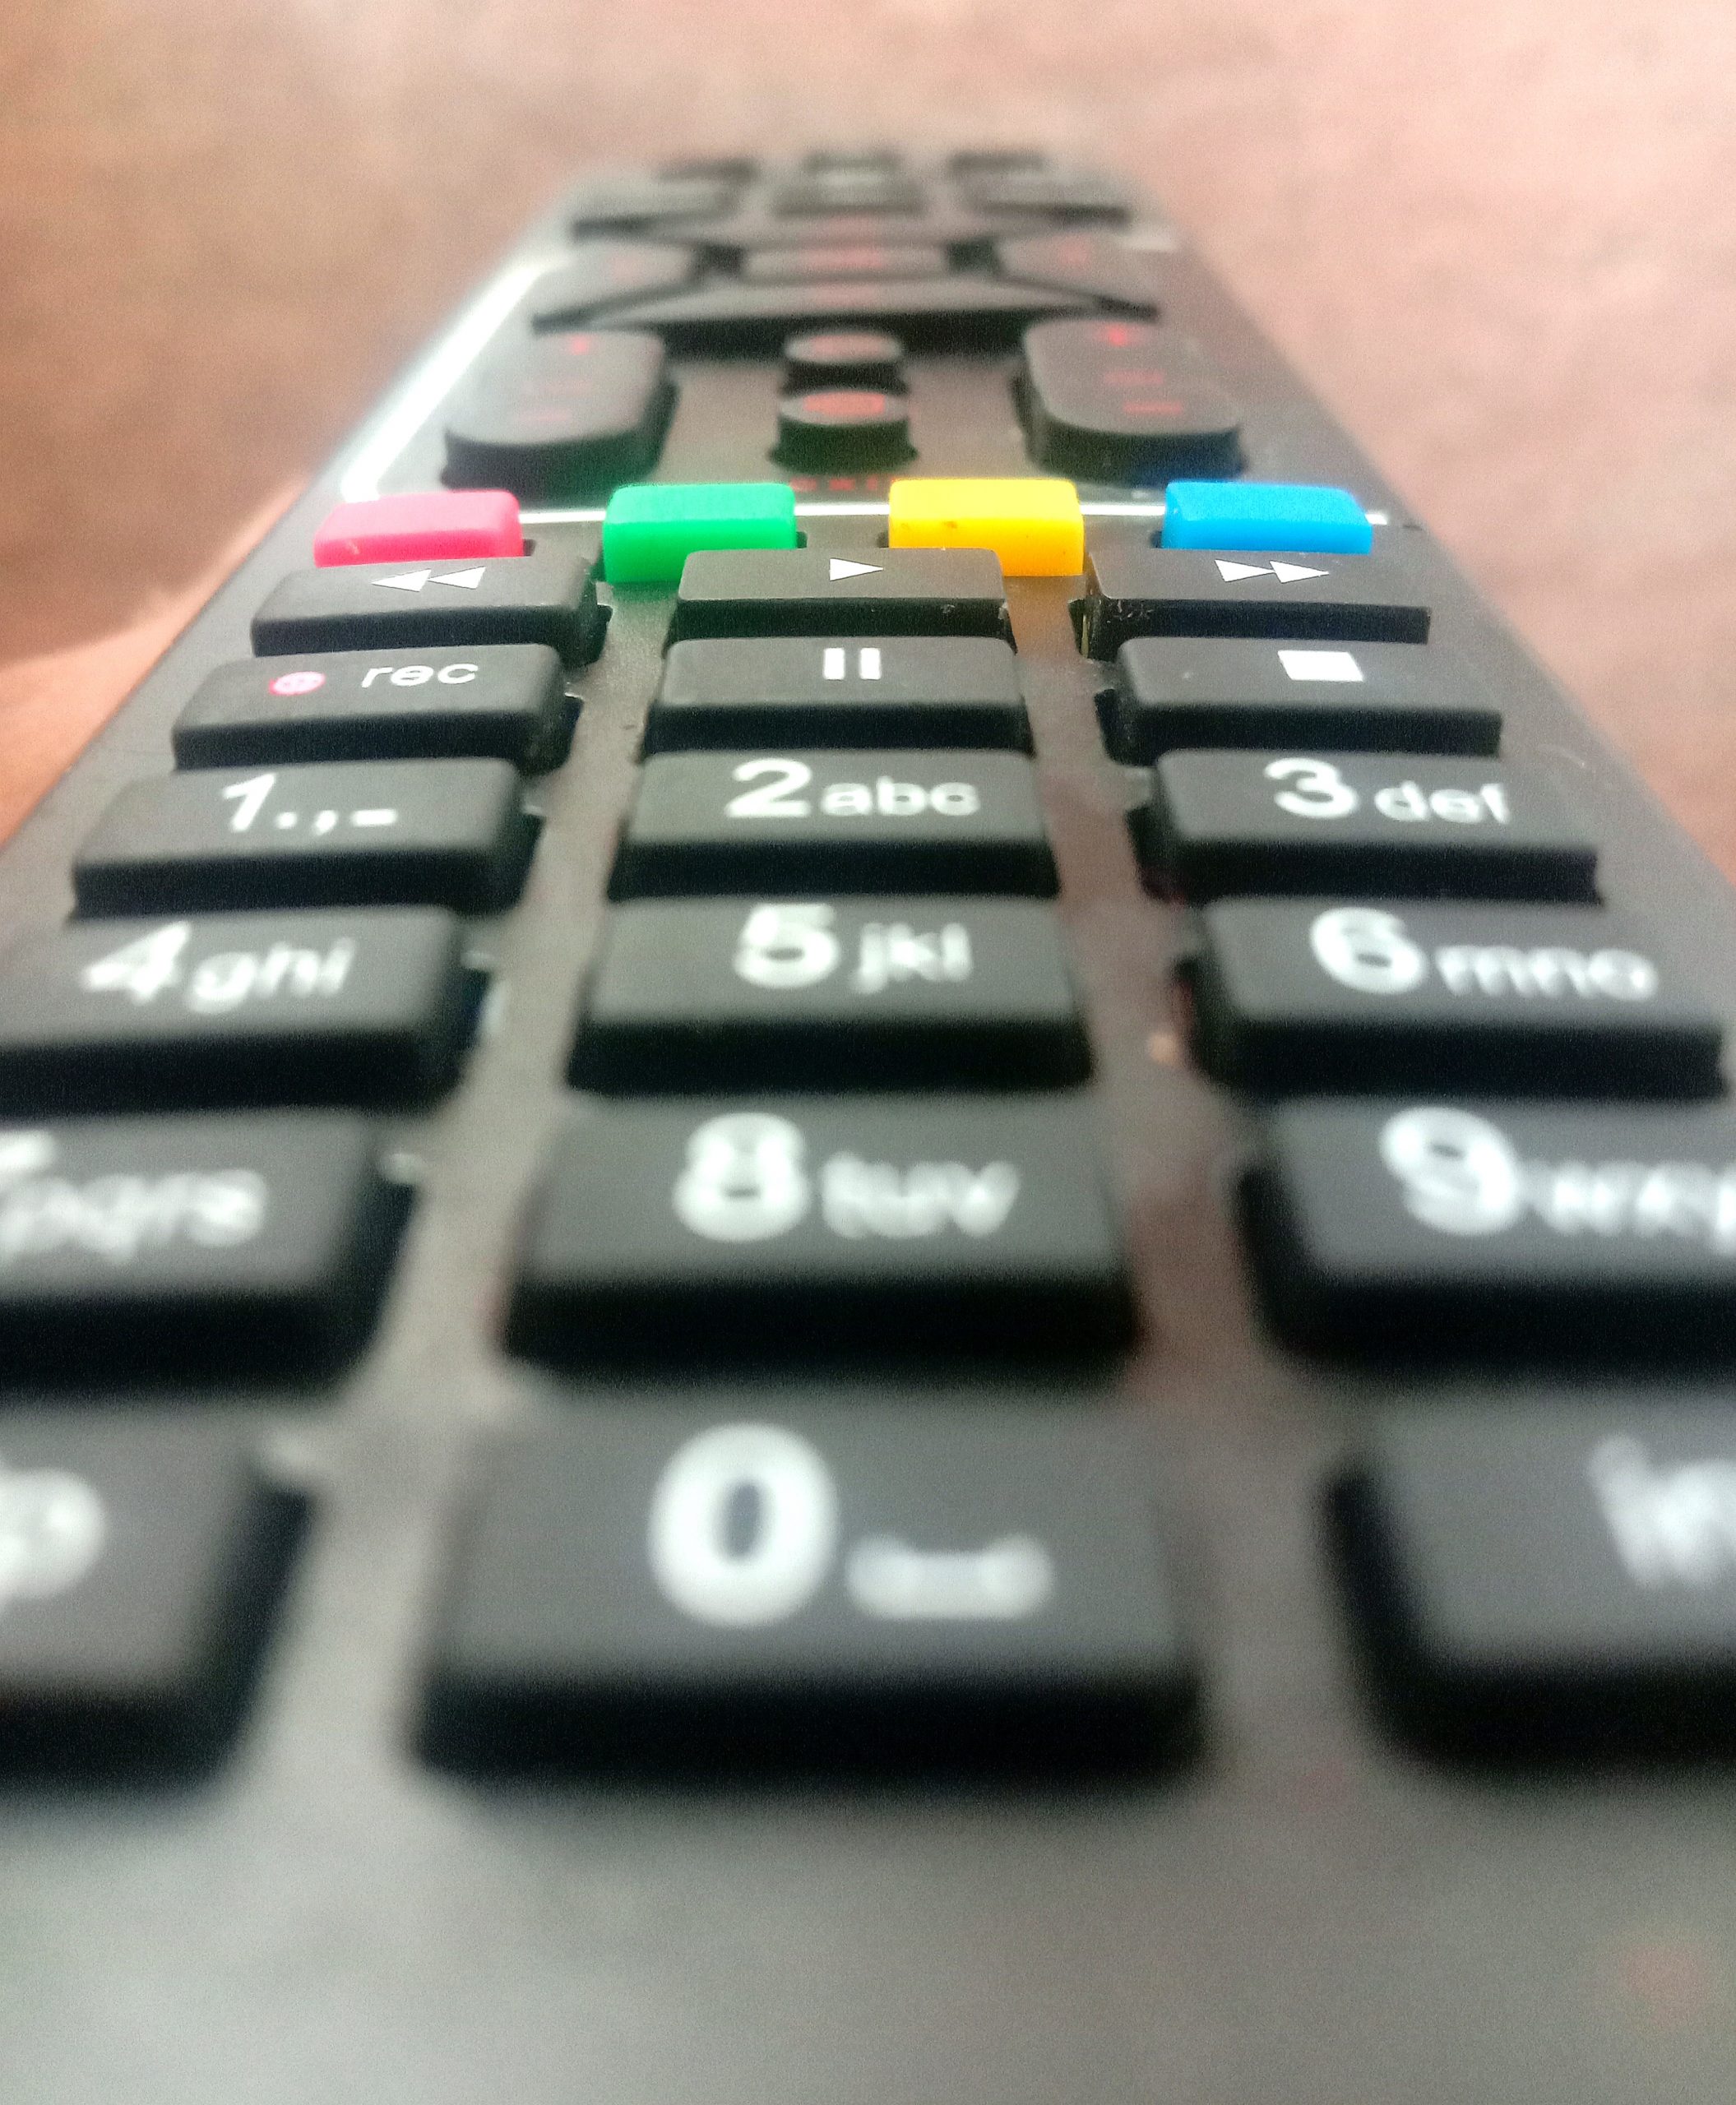 close up of remote control